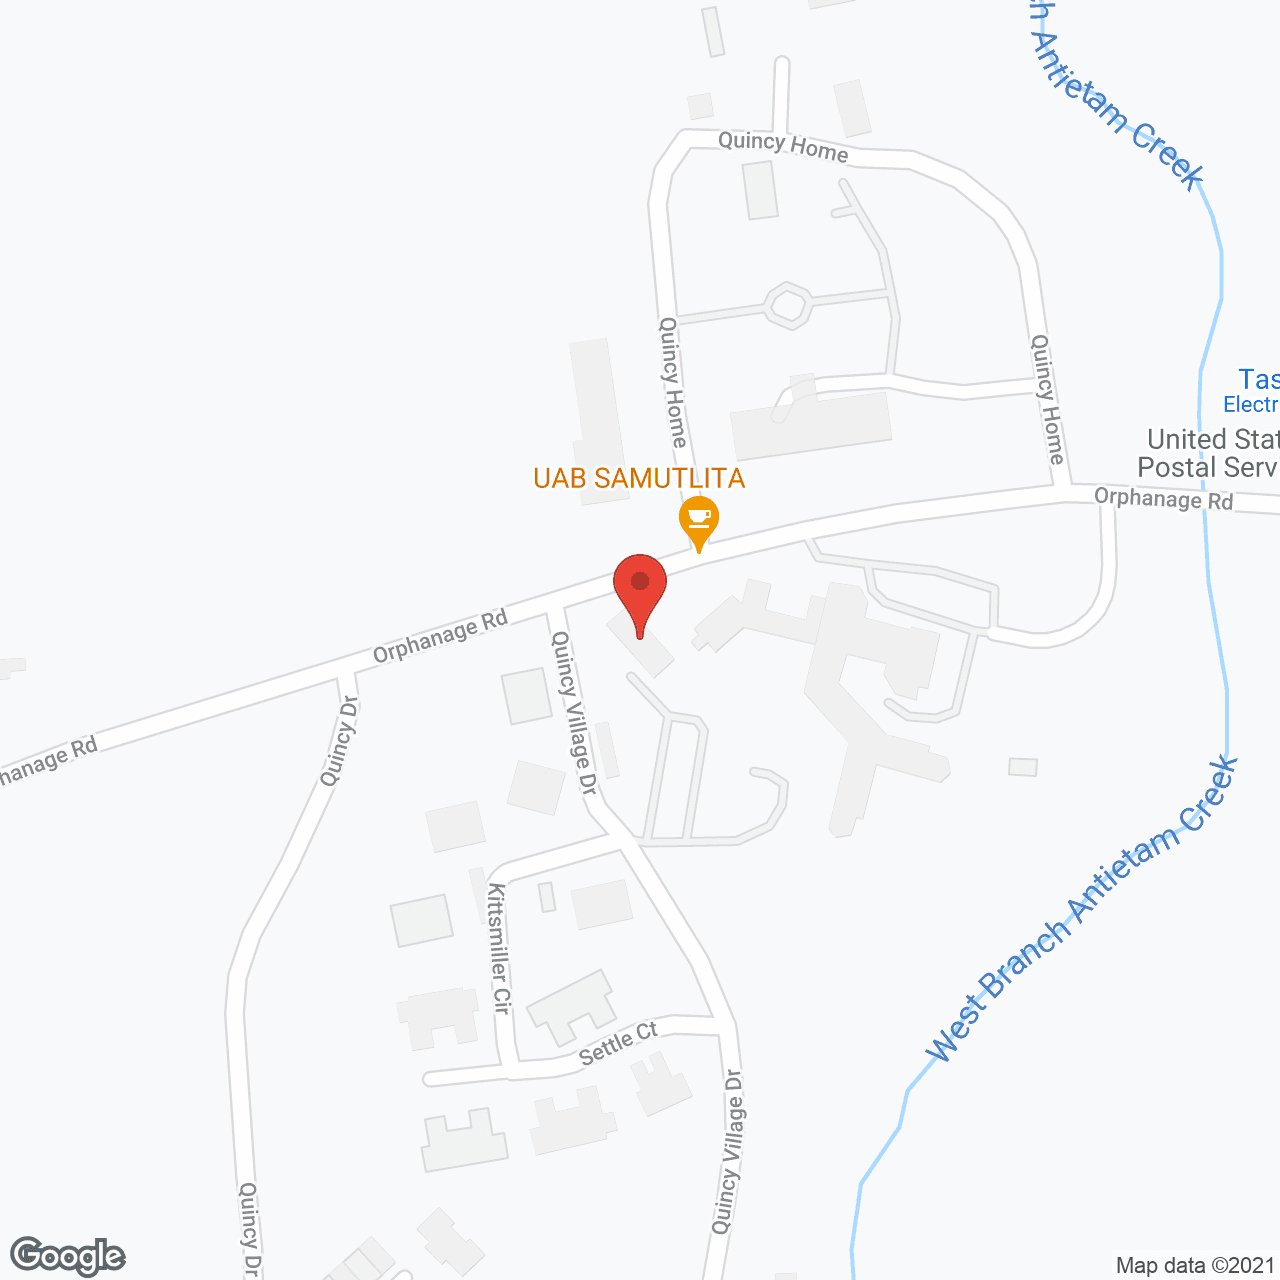 Quincy Village in google map